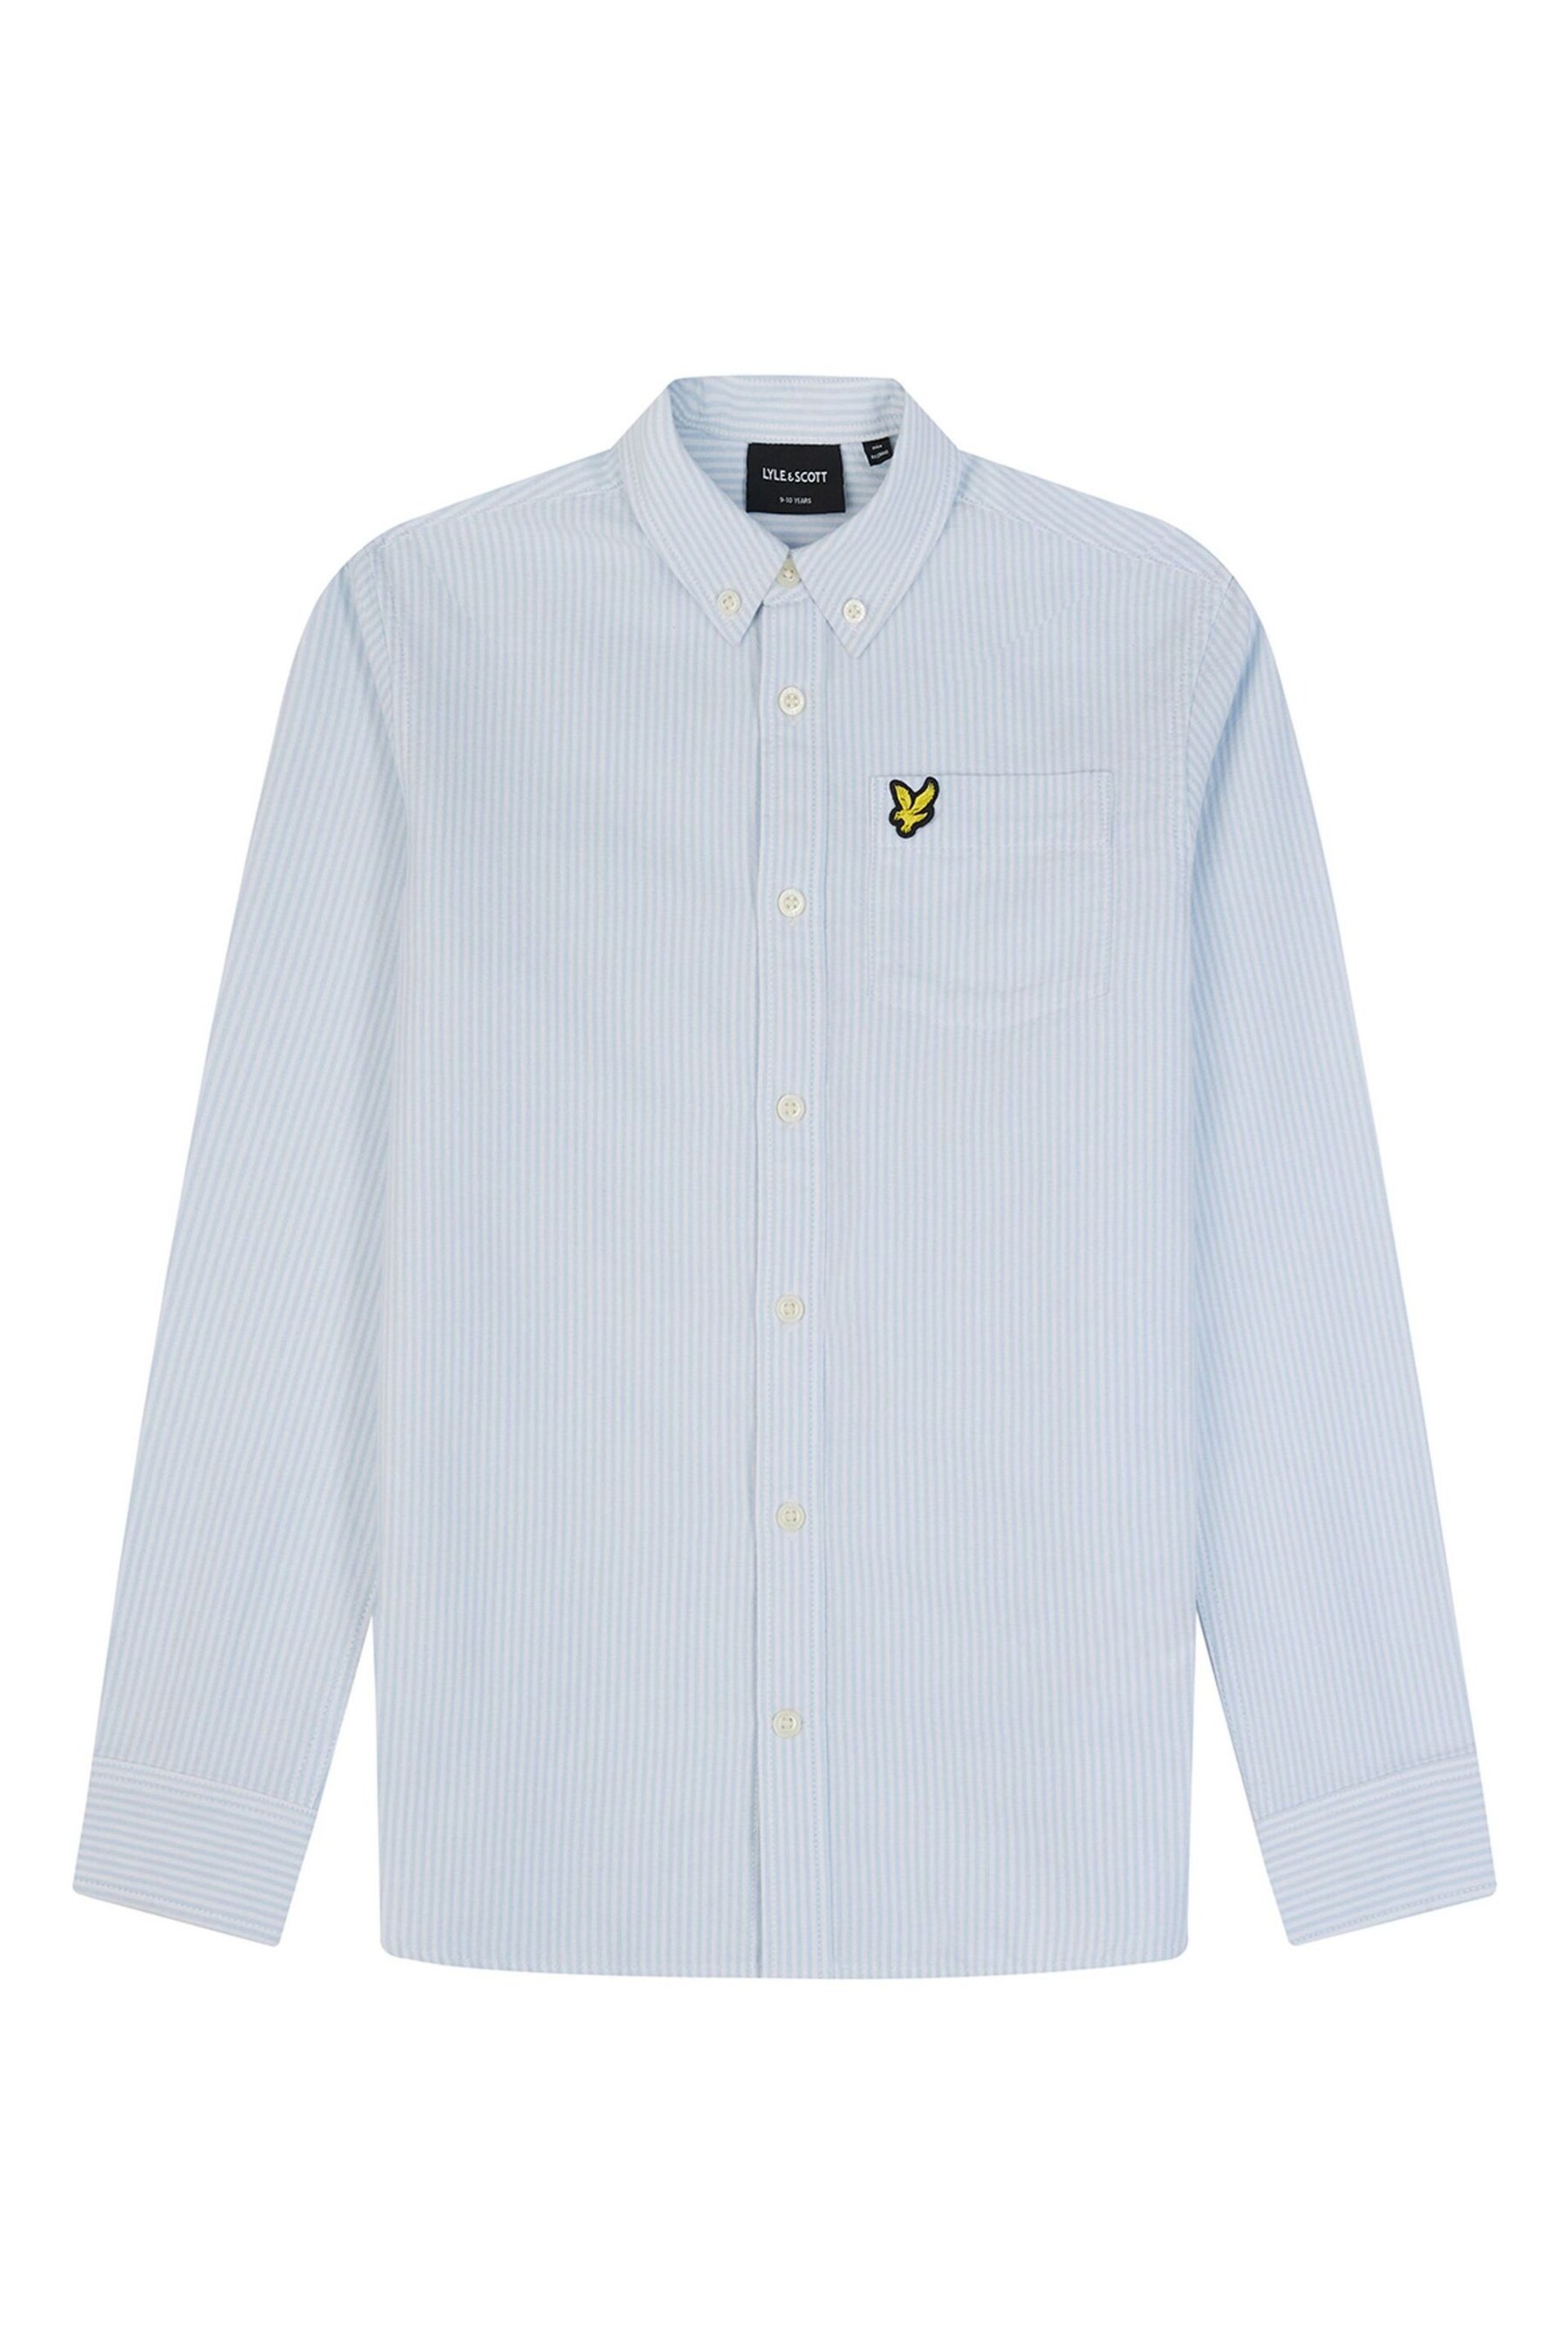 Lyle & Scott Blue Stripe Oxford Shirt - Image 2 of 2